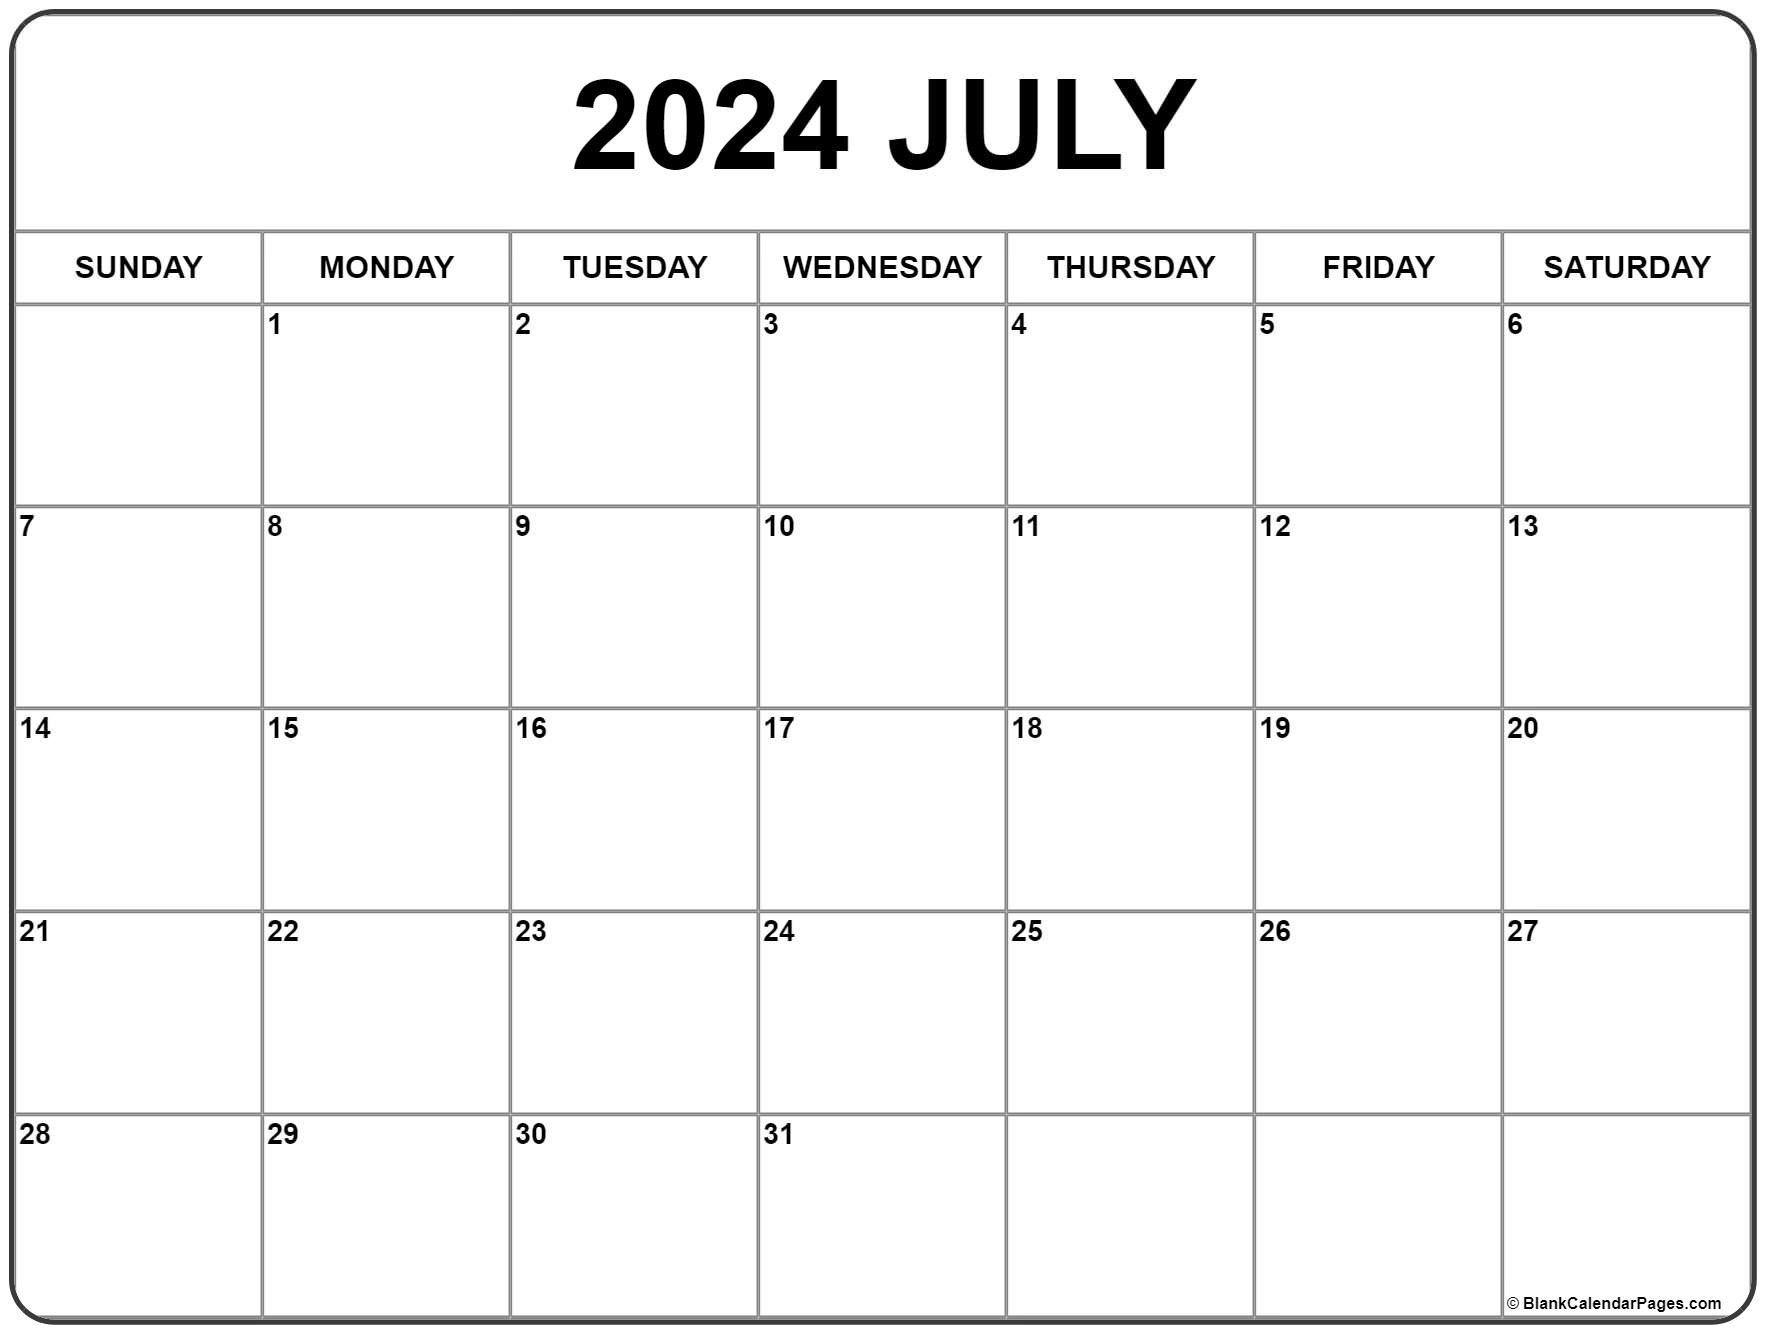 July 2024 Calendar | Free Printable Calendar pertaining to Calendar 2024 July Template